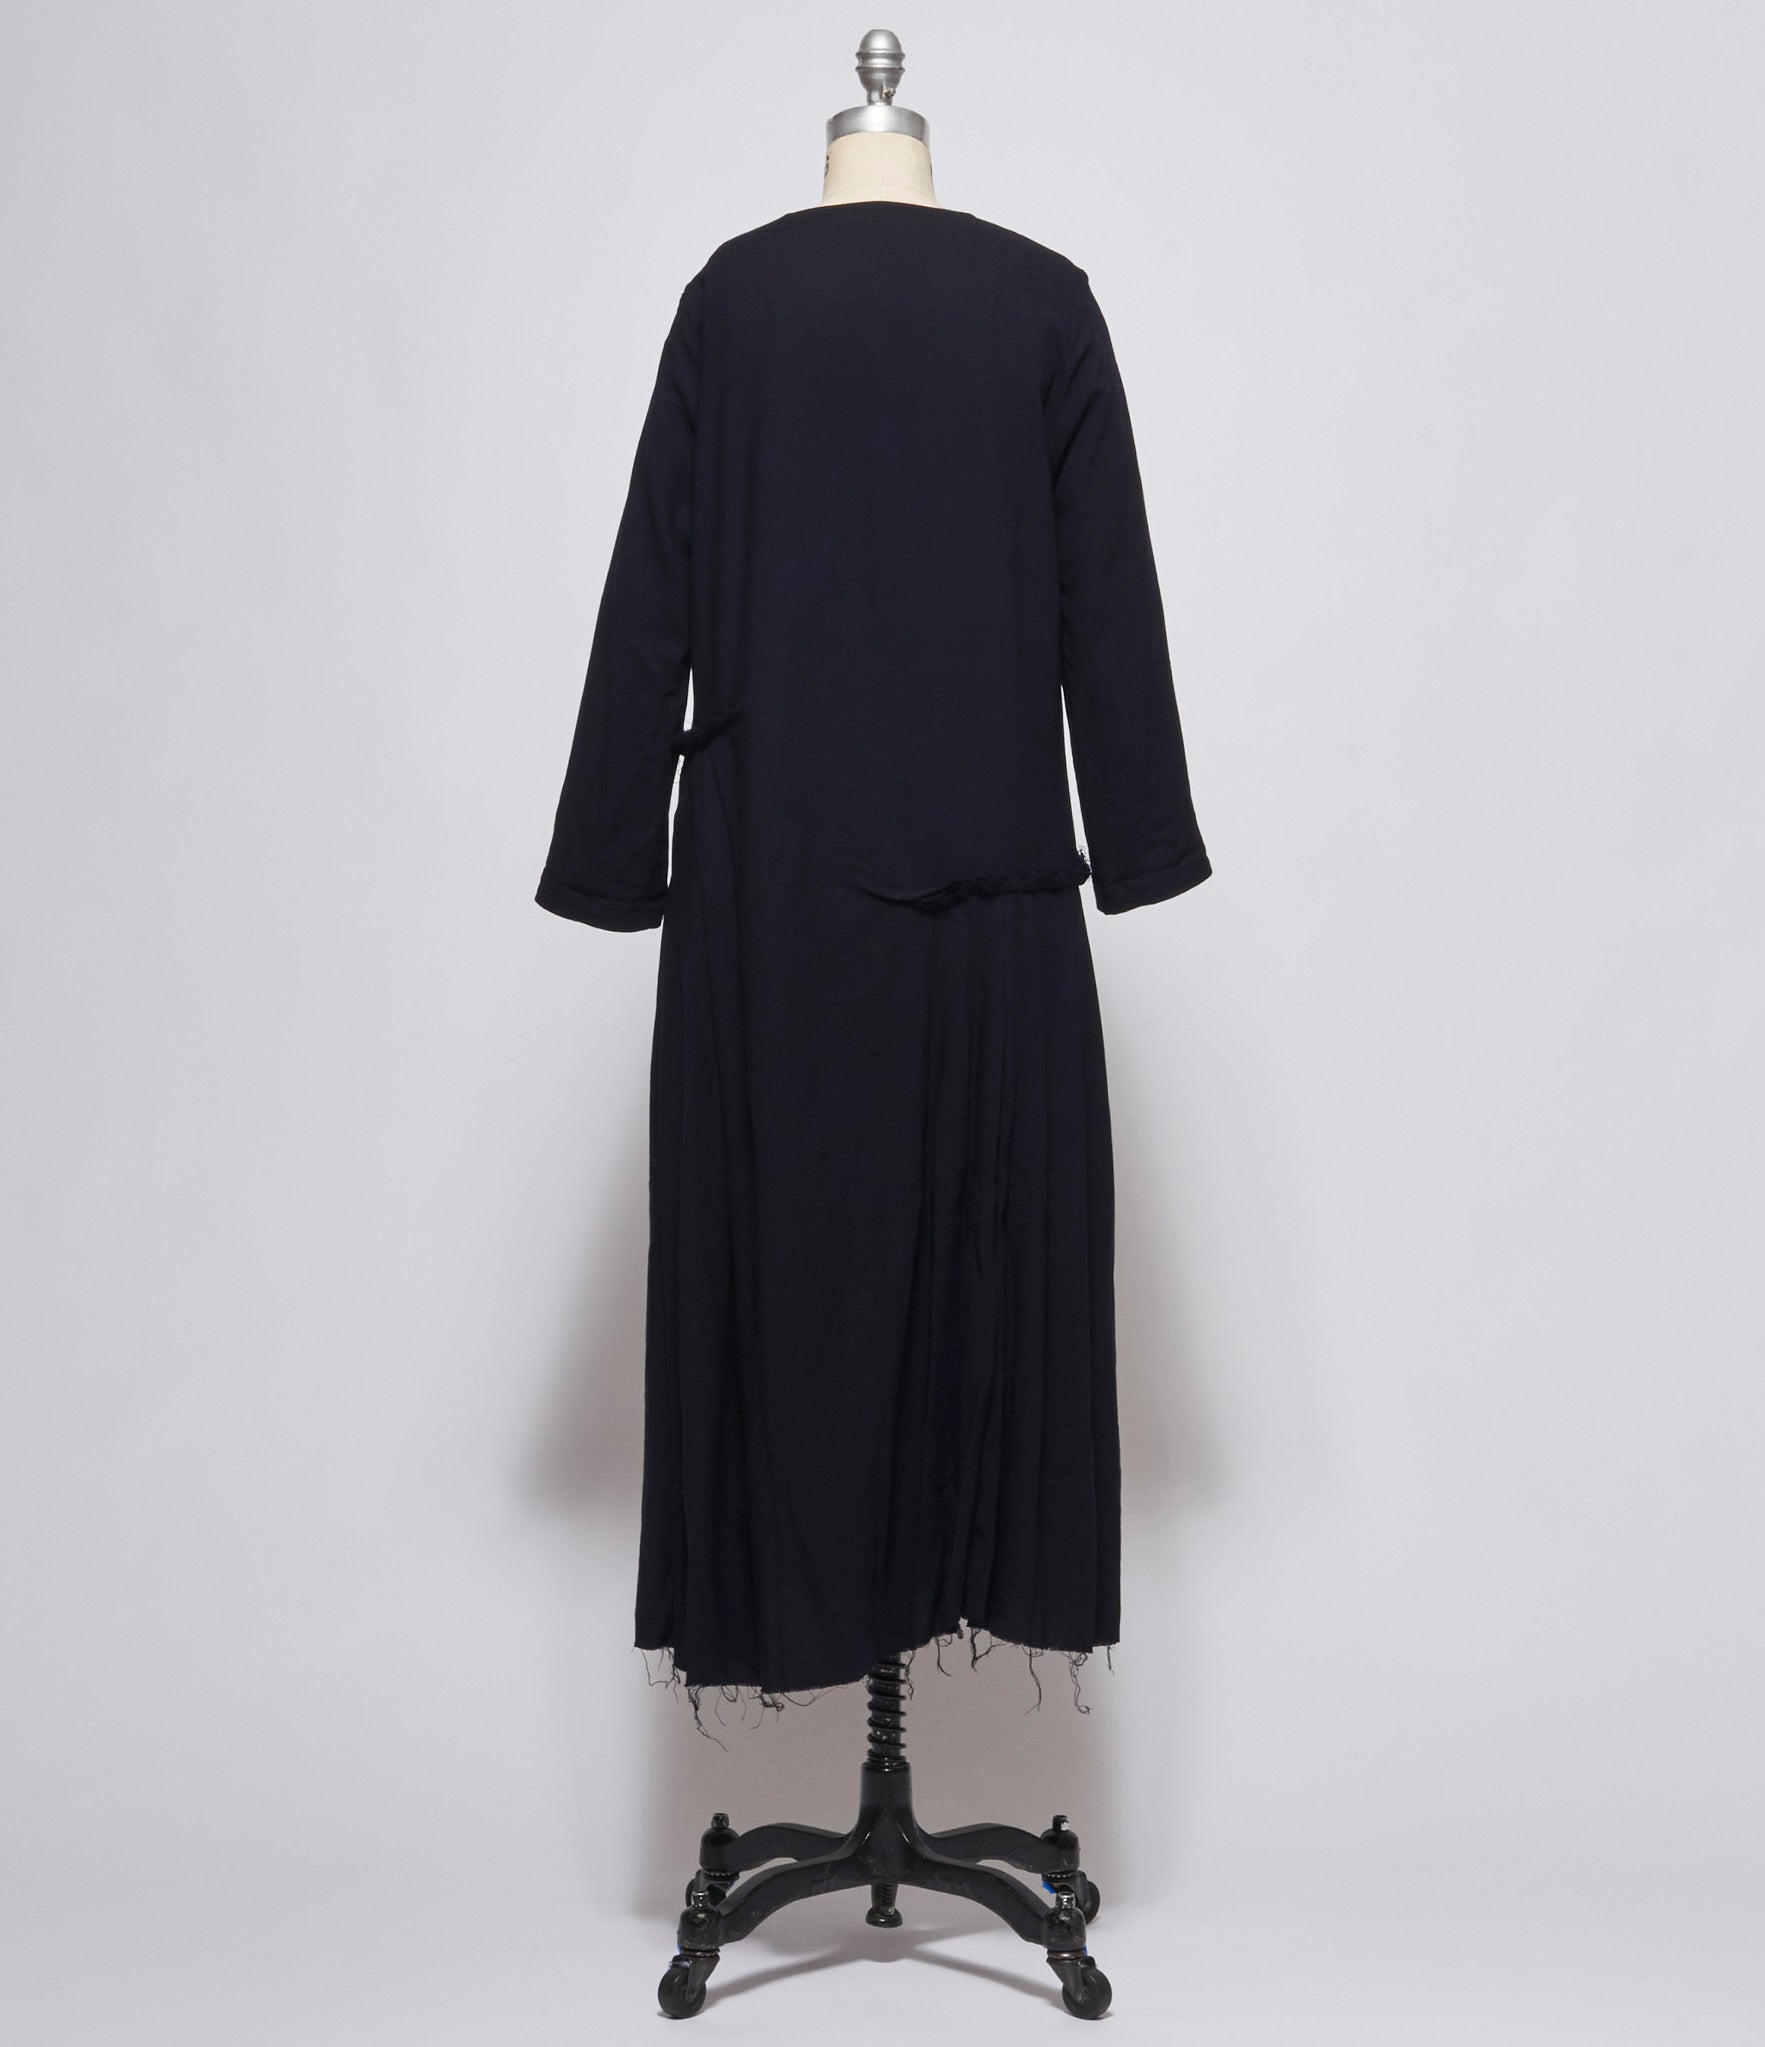 Atelier Suppan Womens Black Pleated Raw Cut Wool Dress